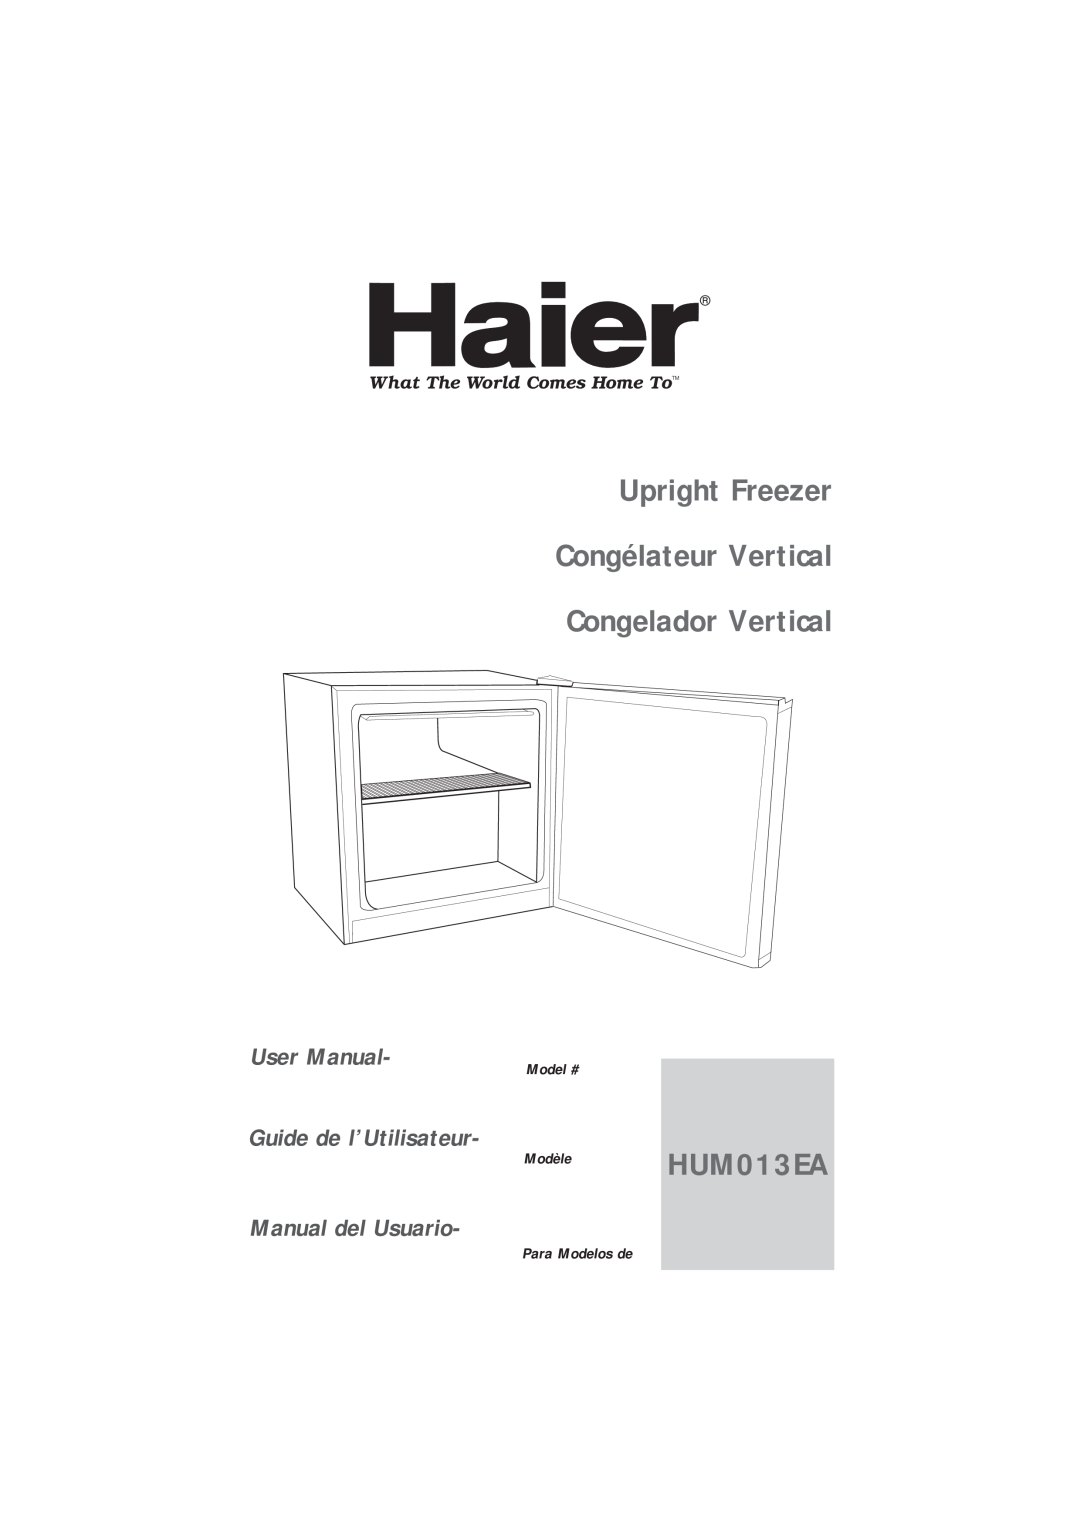 Haier HUM013EA user manual Model #, Para Modelos de, Upright Freezer Congélateur Vertical, Congelador Vertical 